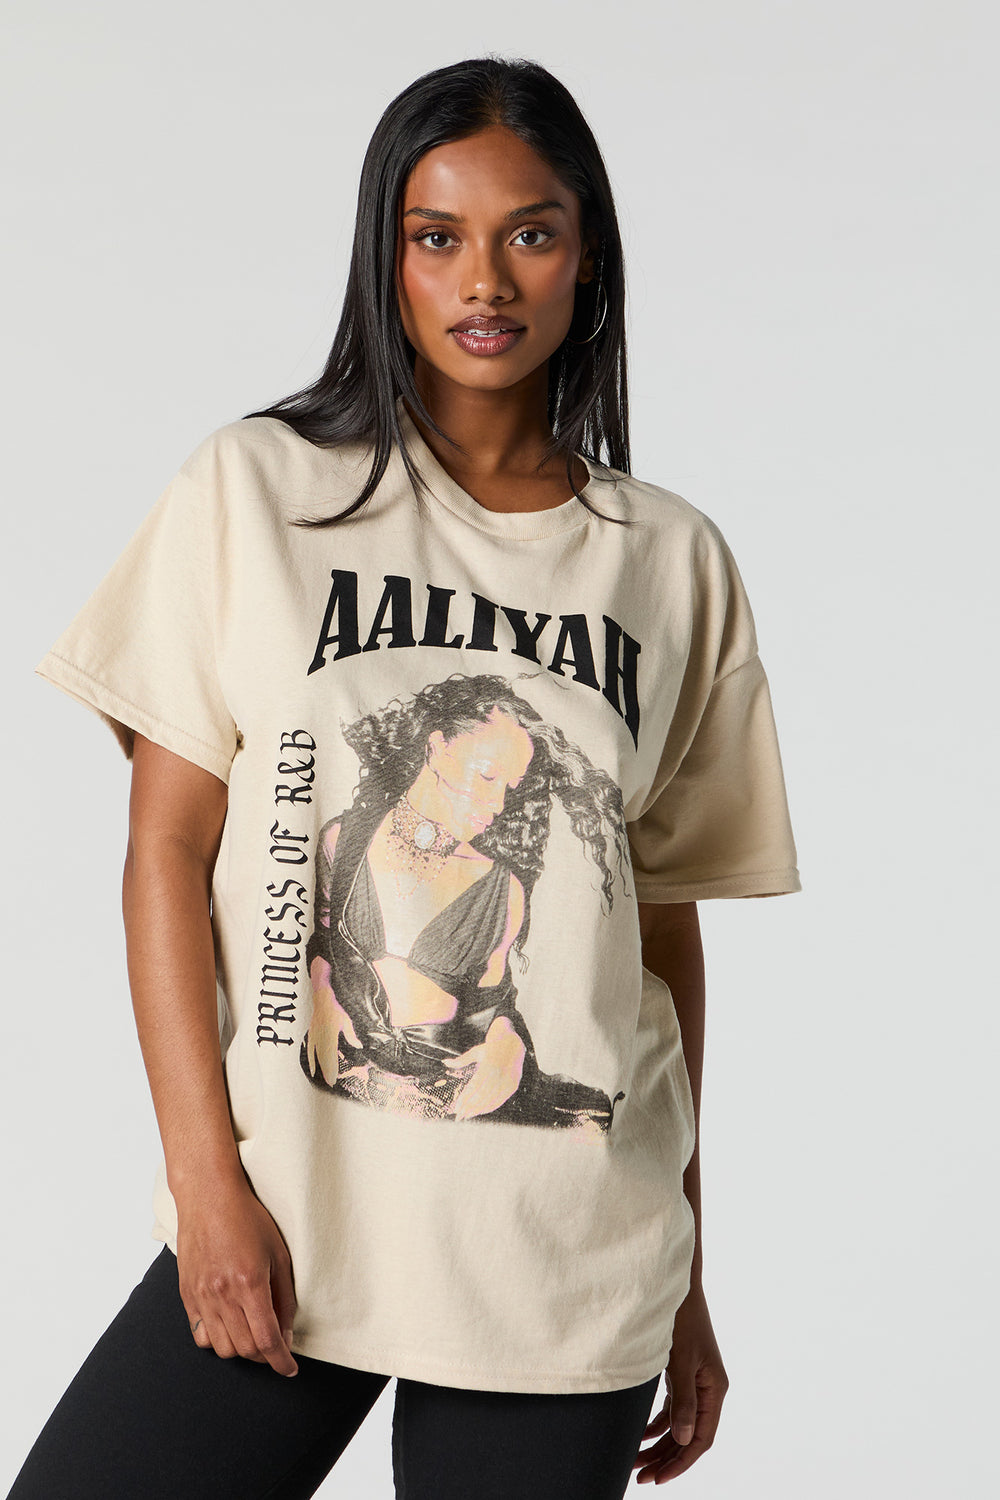 Aaliyah Graphic Boyfriend T-Shirt Aaliyah Graphic Boyfriend T-Shirt 2